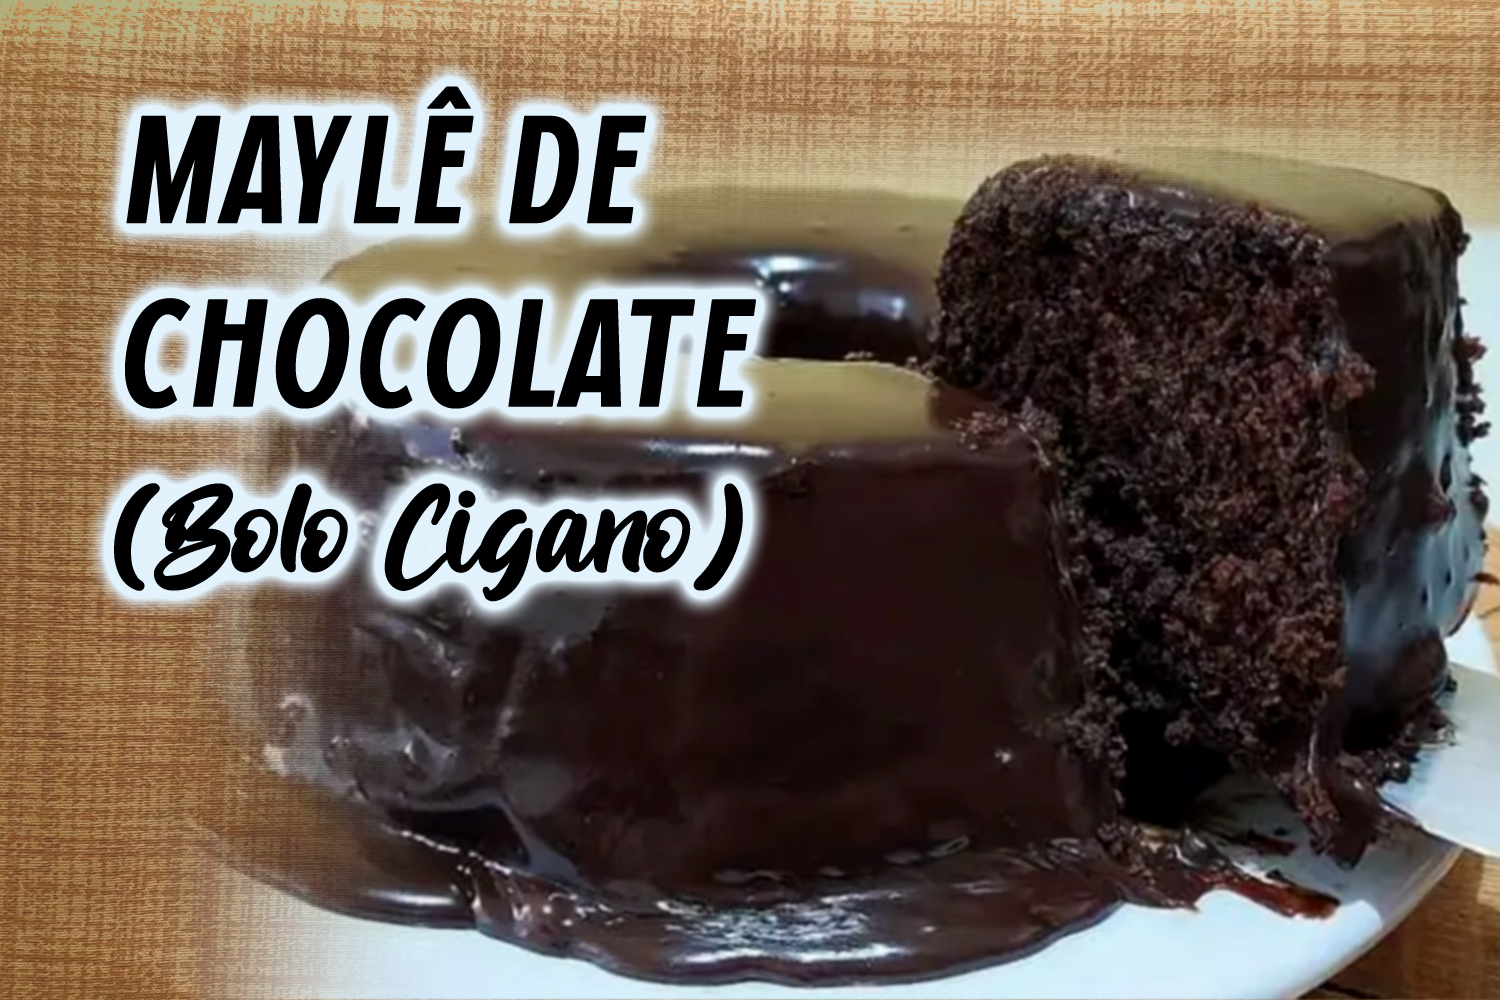 Maylê de Chocolate (Bolo Cigano)